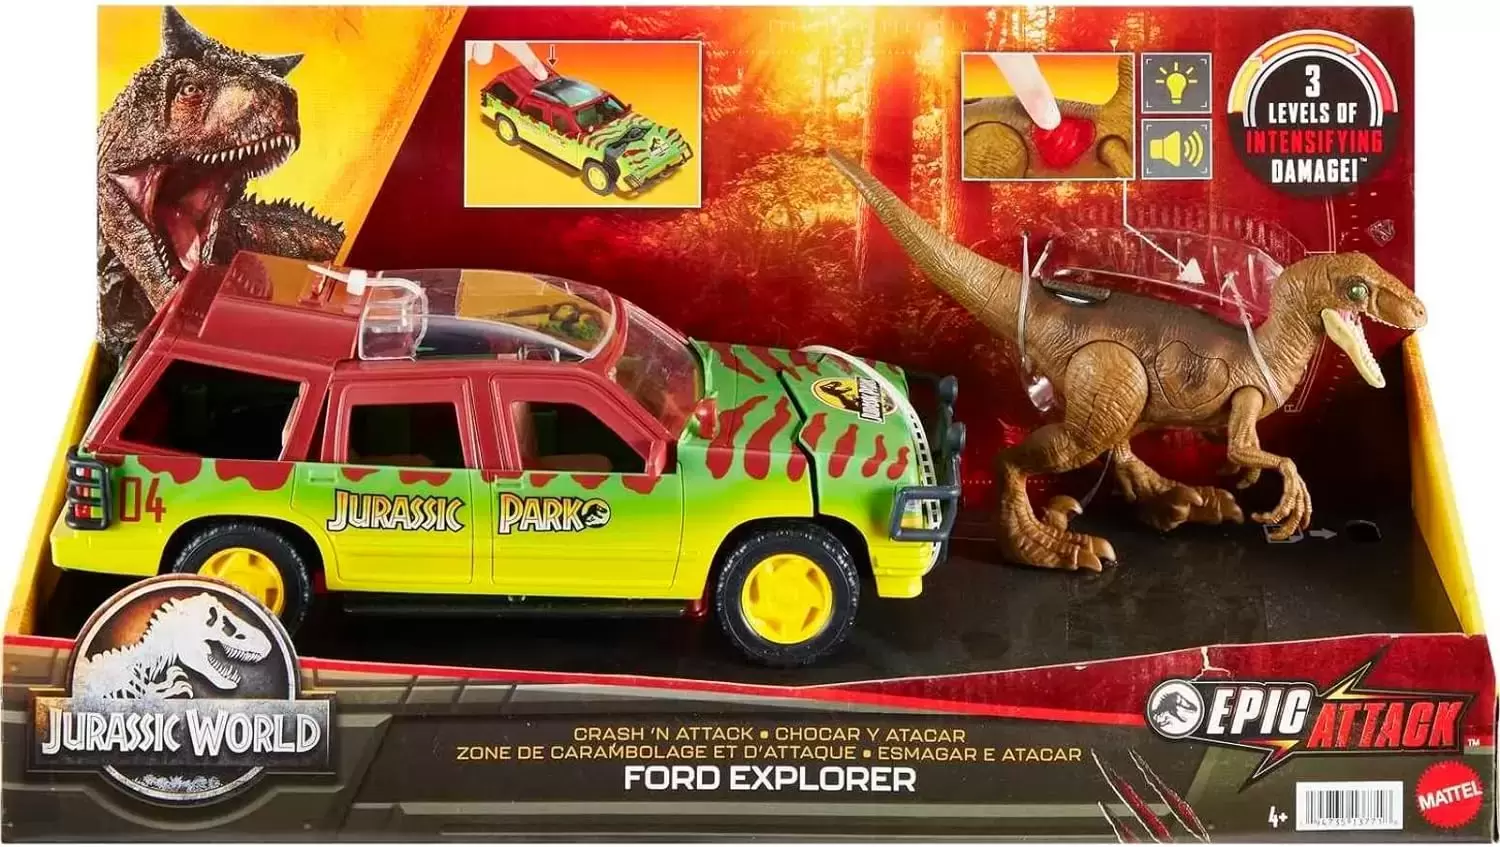 Jurassic World - Ford Explorer - Crash \'n Attack (Epic Attack)